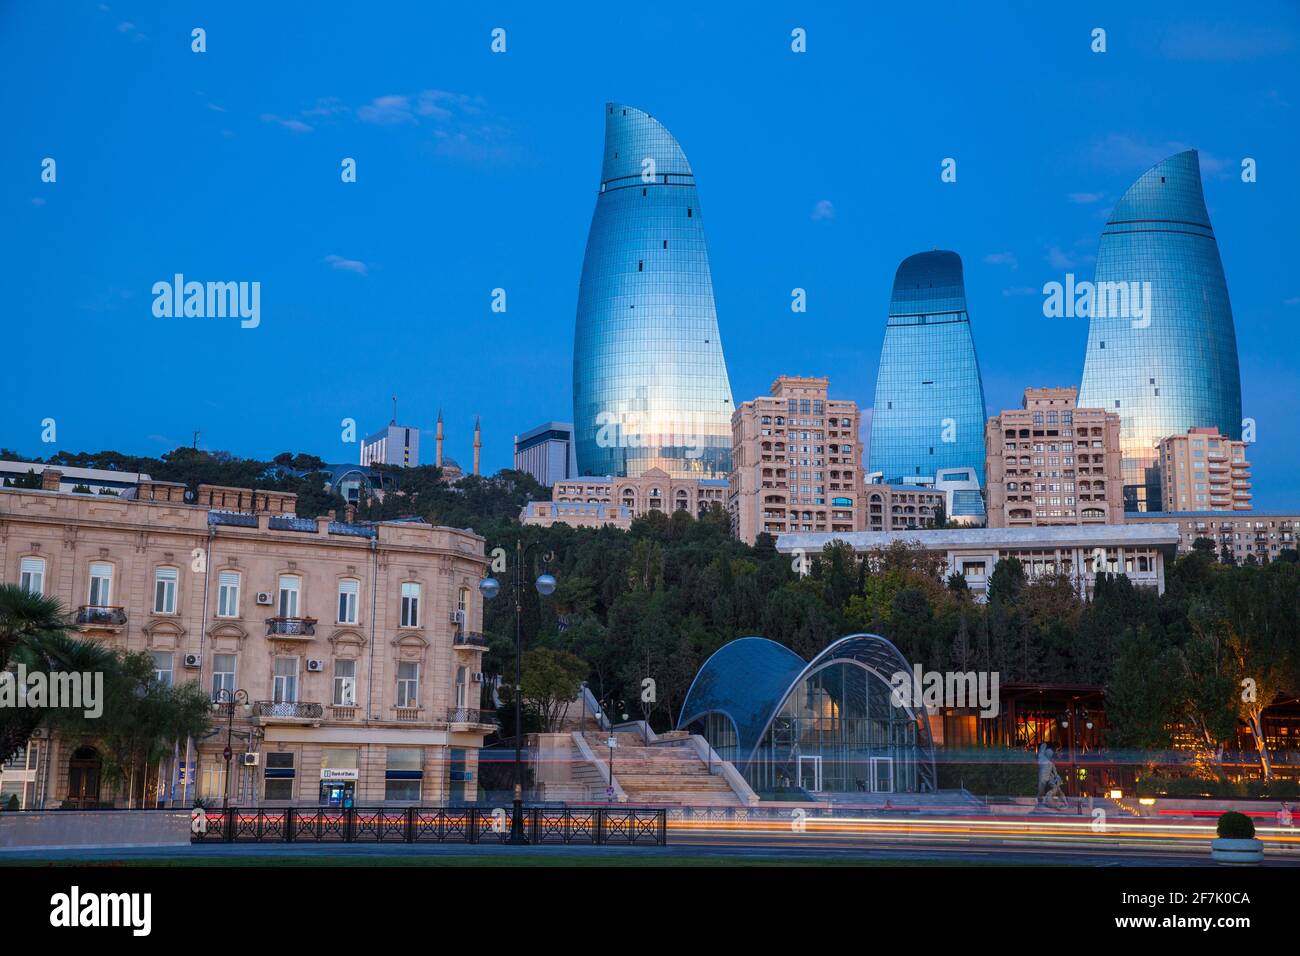 Azerbaijan, Baku, Entrance to Funicular railway and Flame Towers Stock Photo